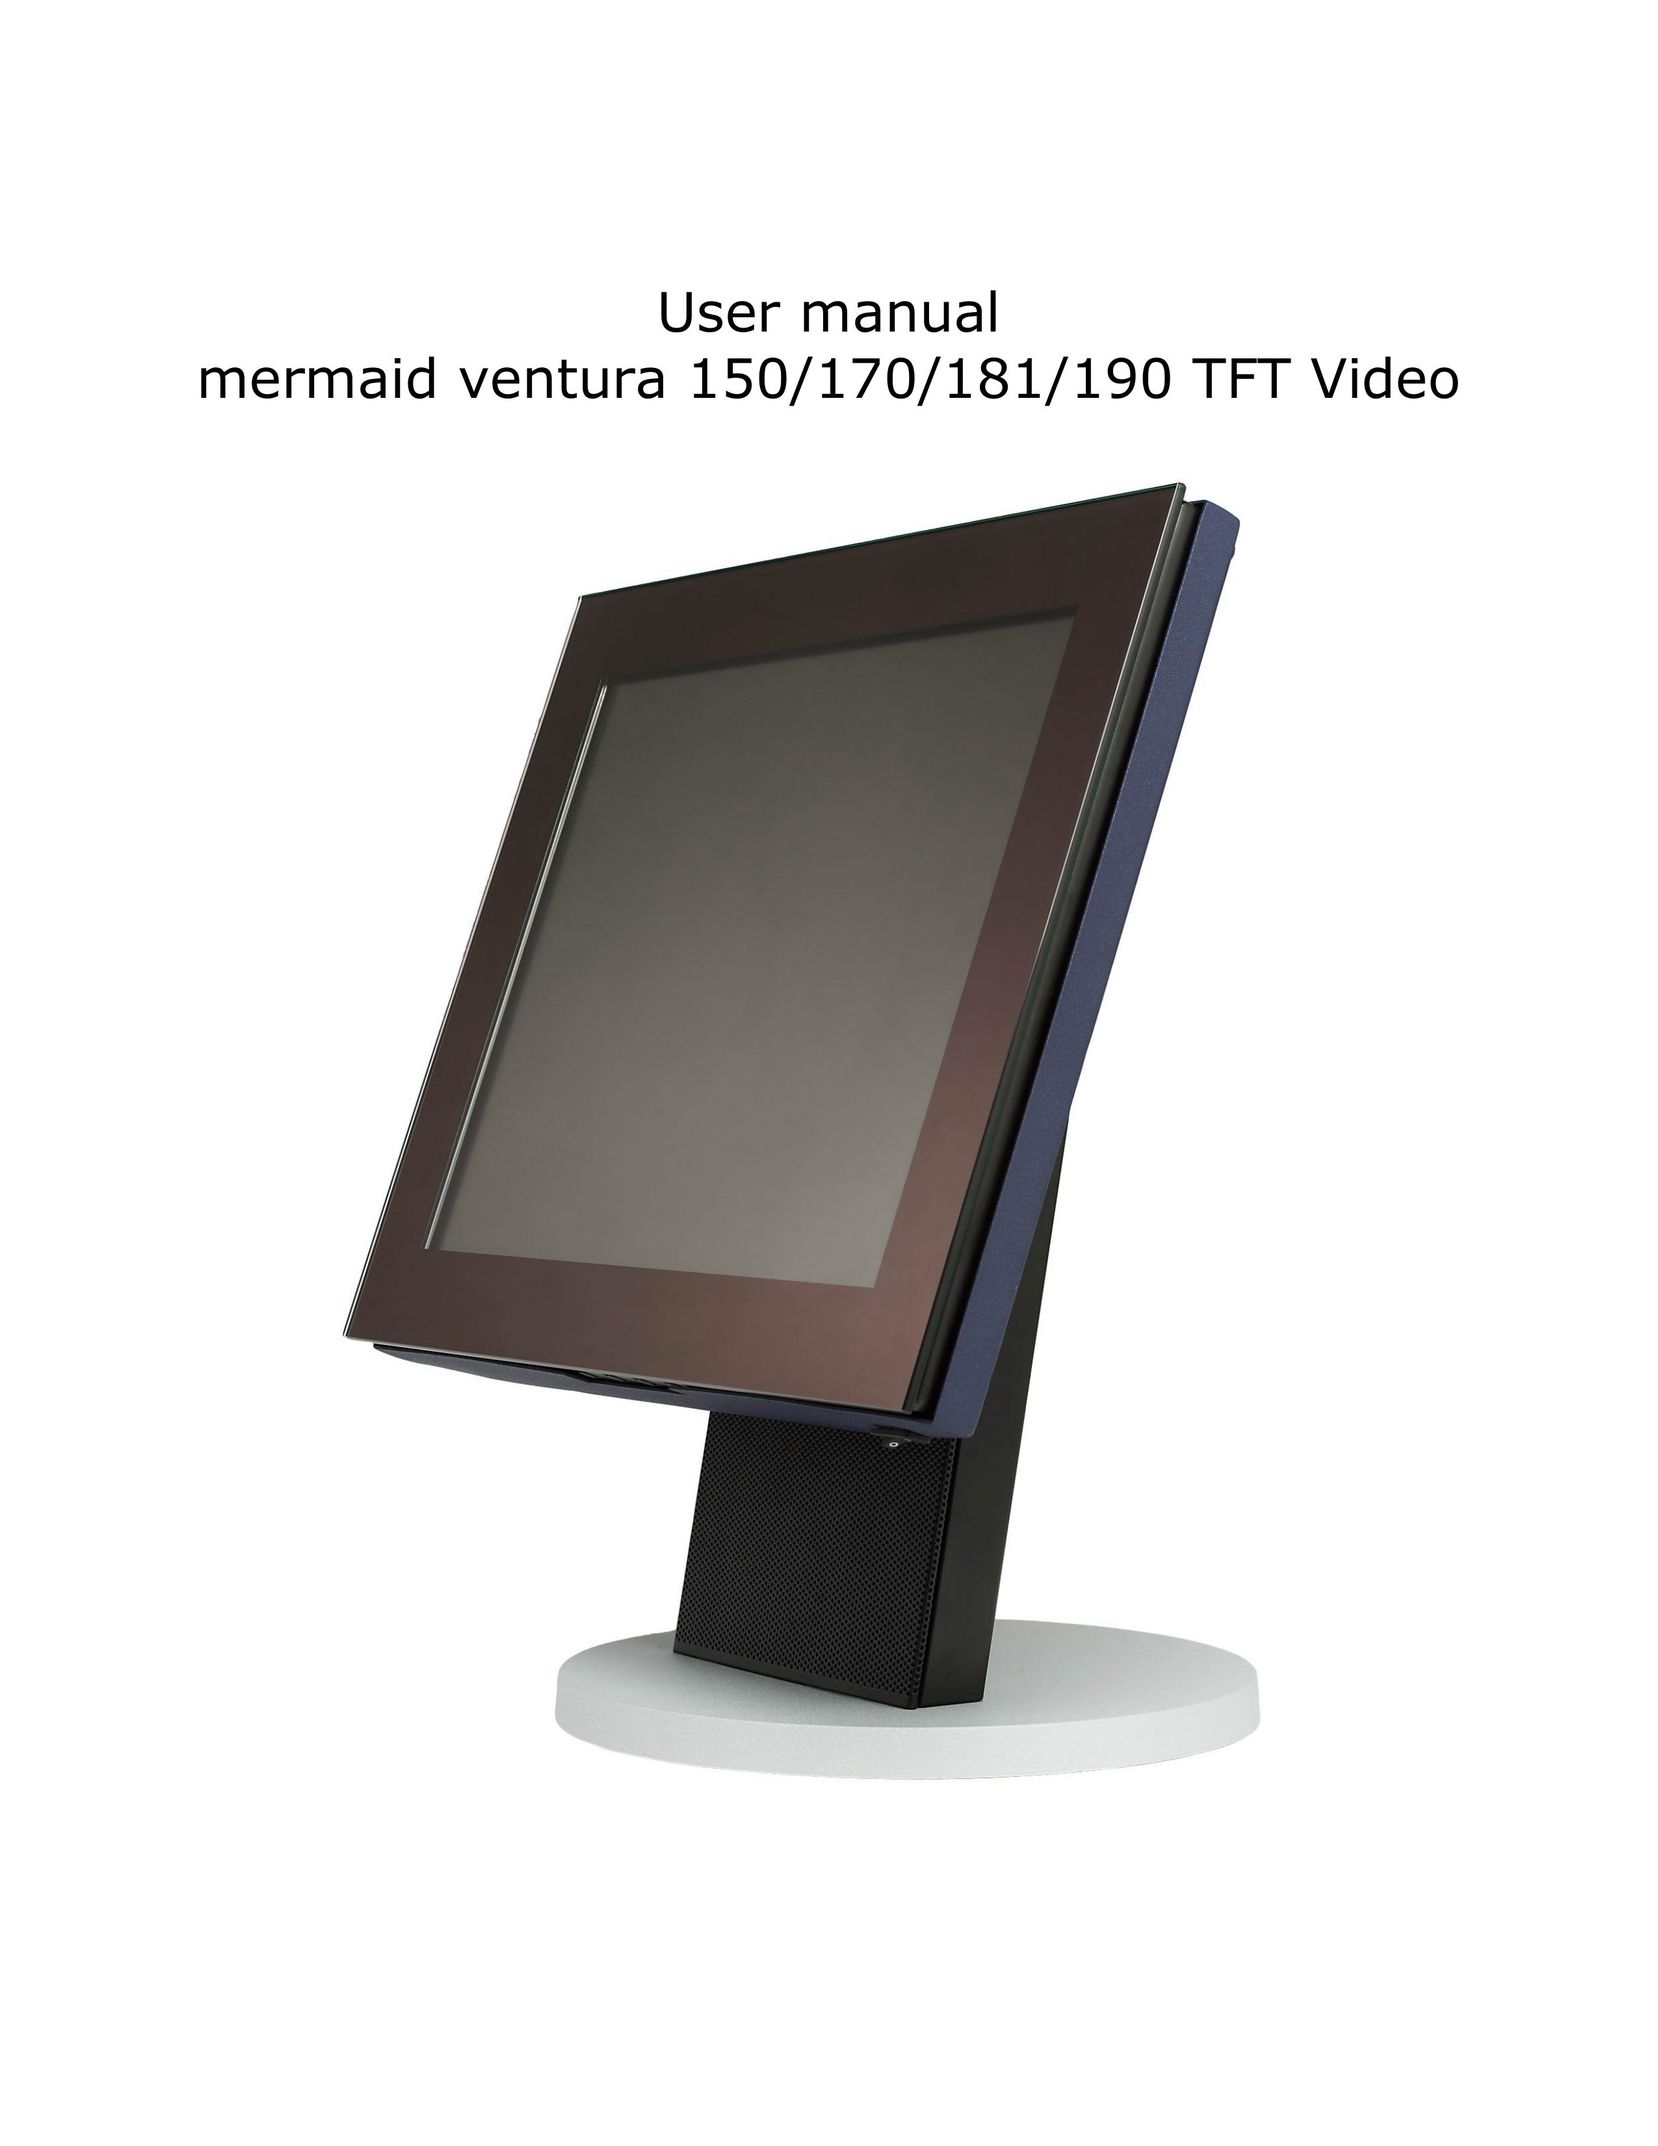 Mermaid Technology 150170181190 Computer Monitor User Manual